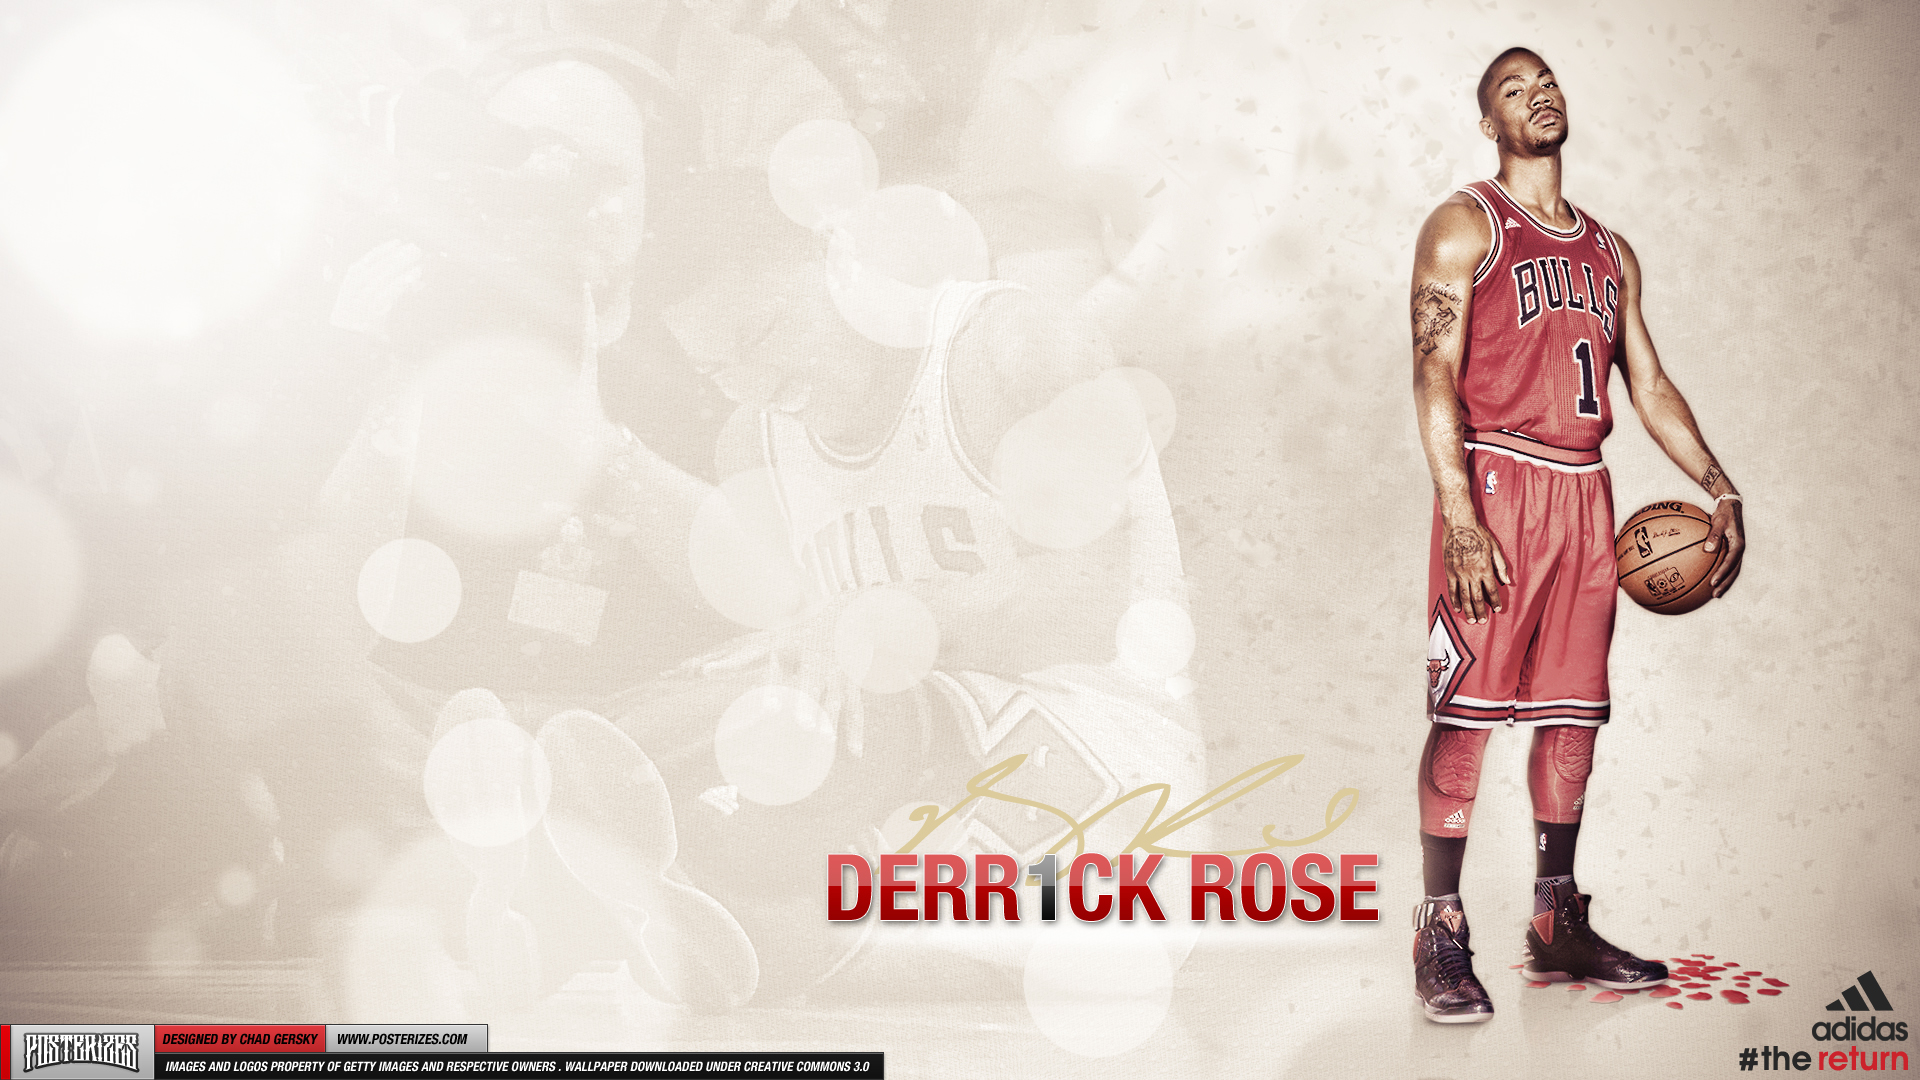 derrick rose wallpaper iphone,maroon,font,formal wear,fashion design,basketball player